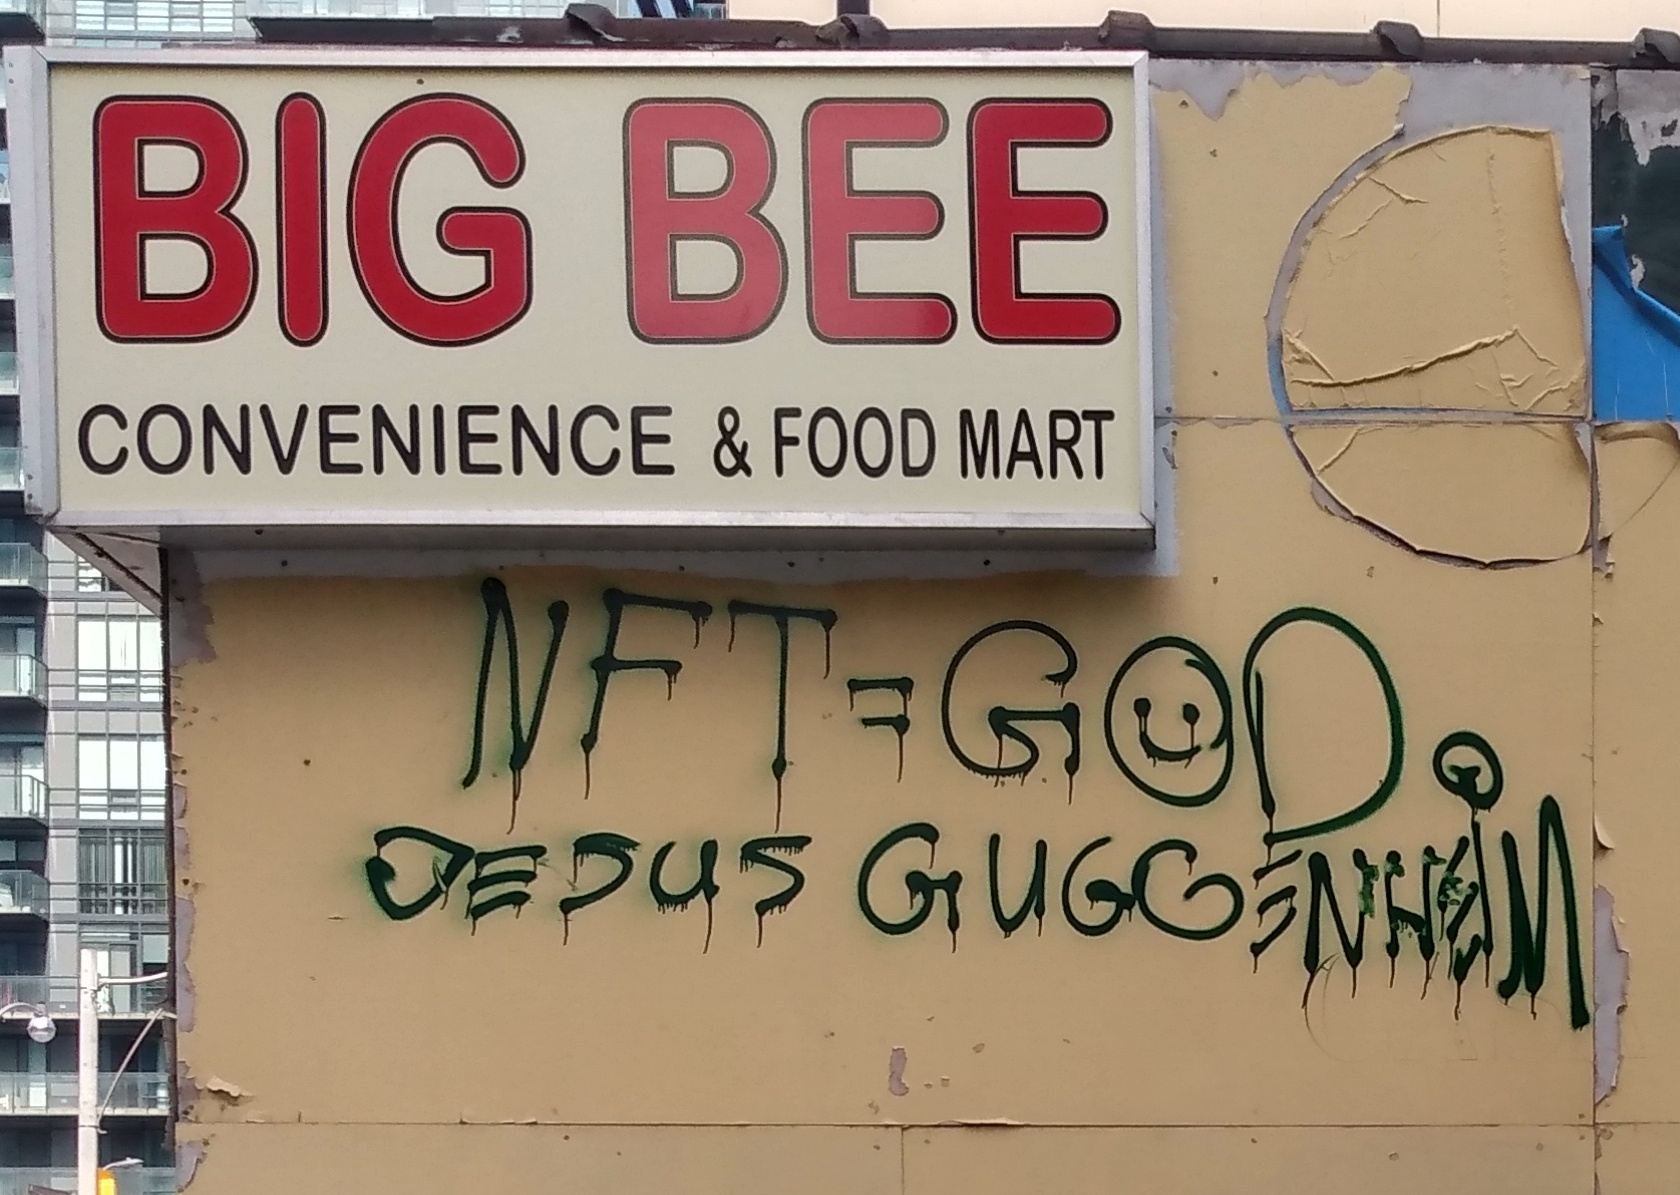 Graffiti saying NFT = G☺d / Jesus Guggenheim